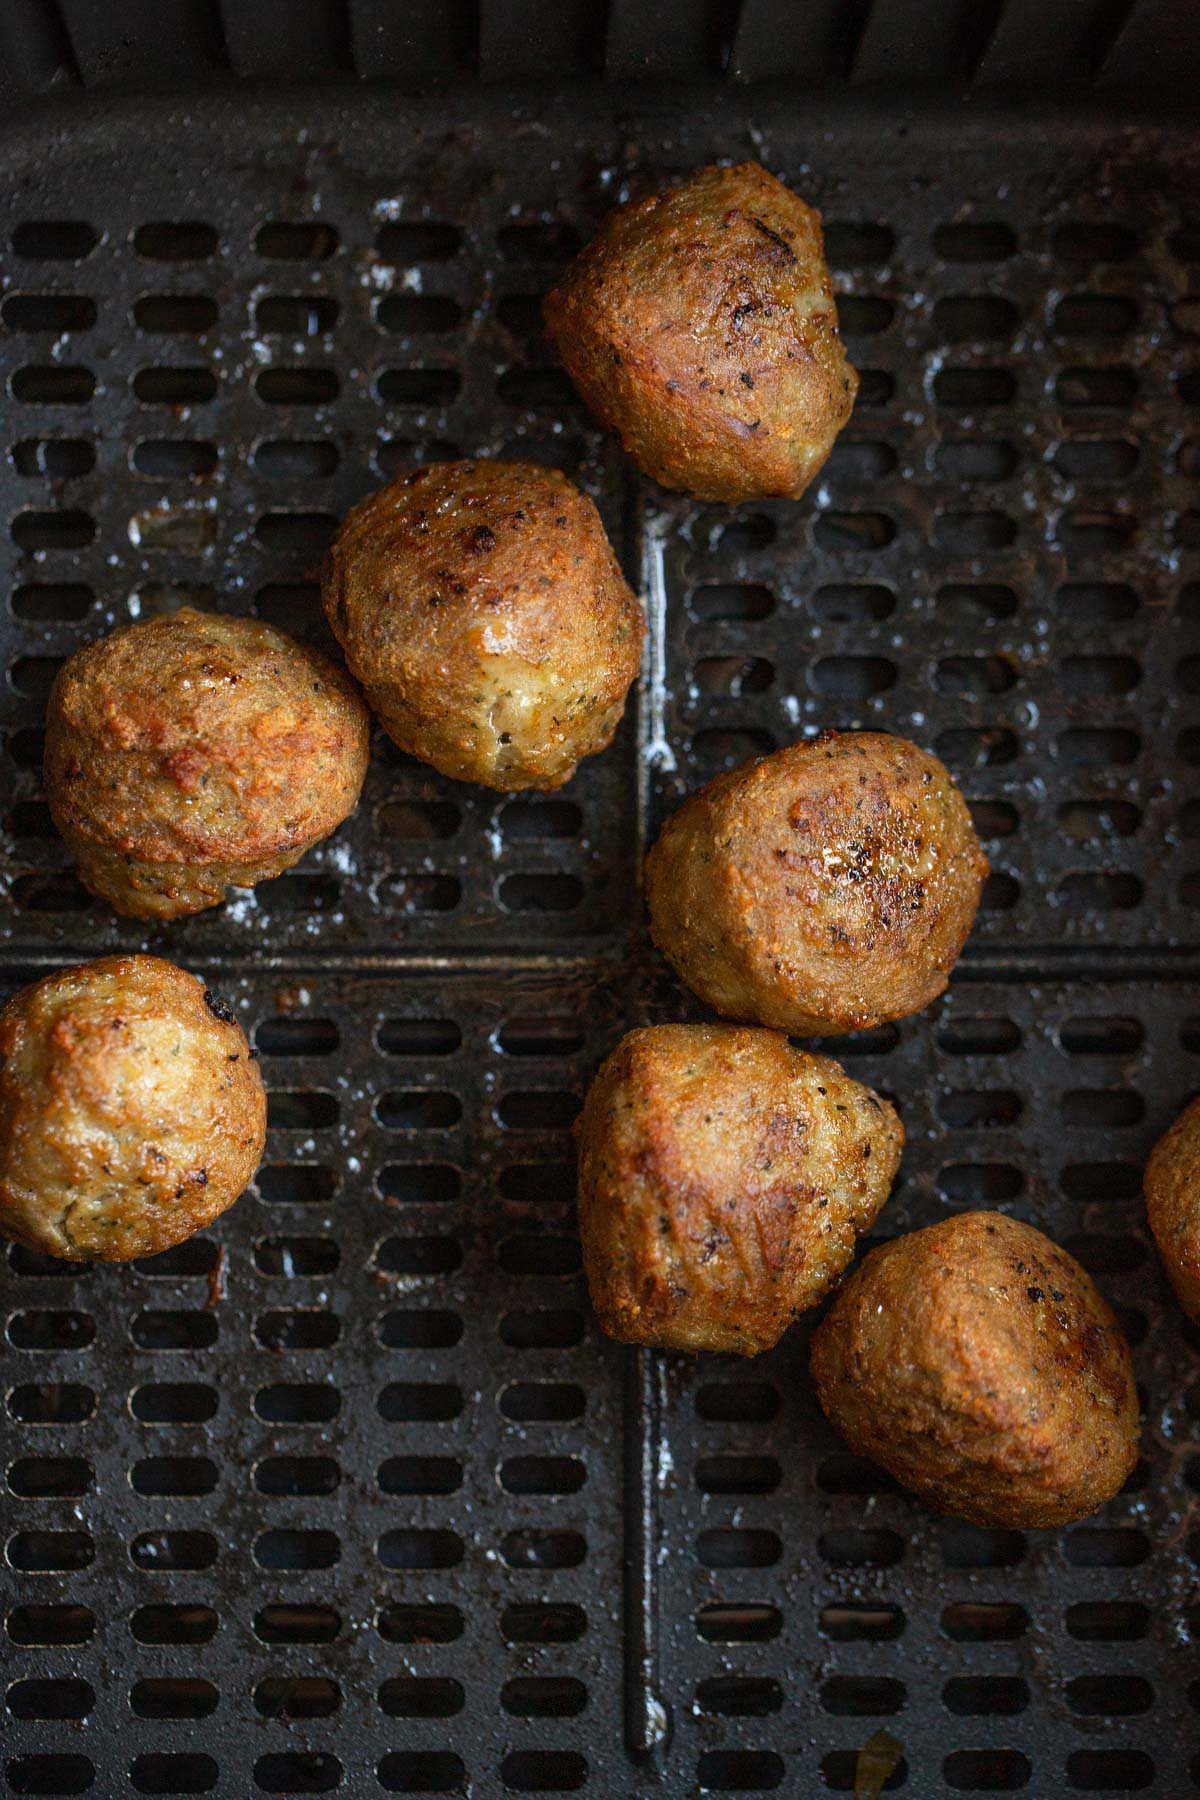 Cooked meatballs in air fryer